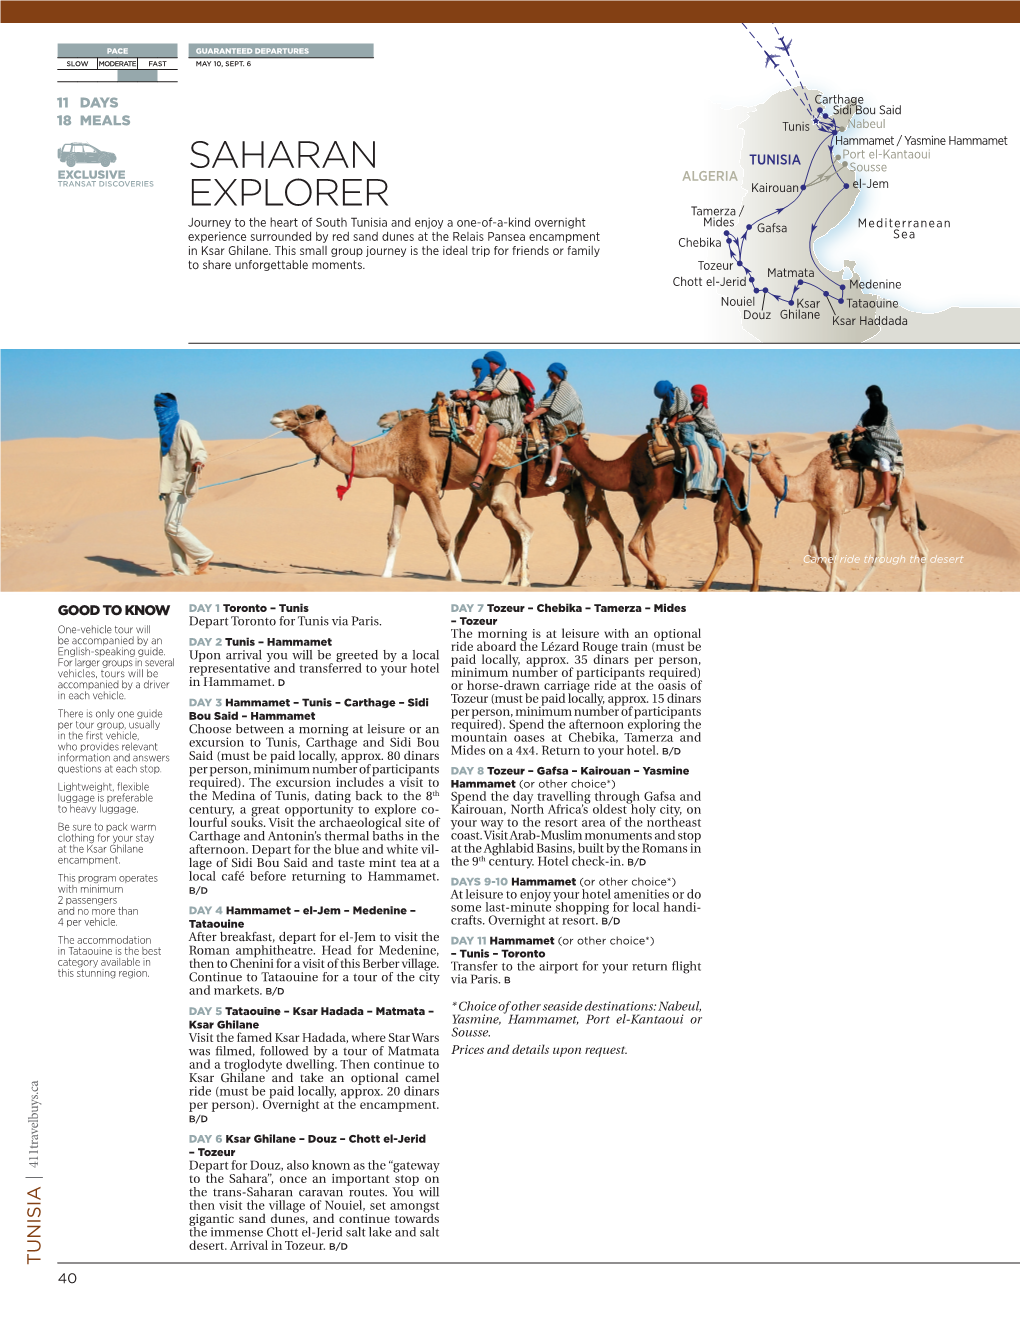 Saharan Explorer.Indd 1 31/07/12 09:37:07 from $ * Carthage 1599 Sidi Bou Said Jan